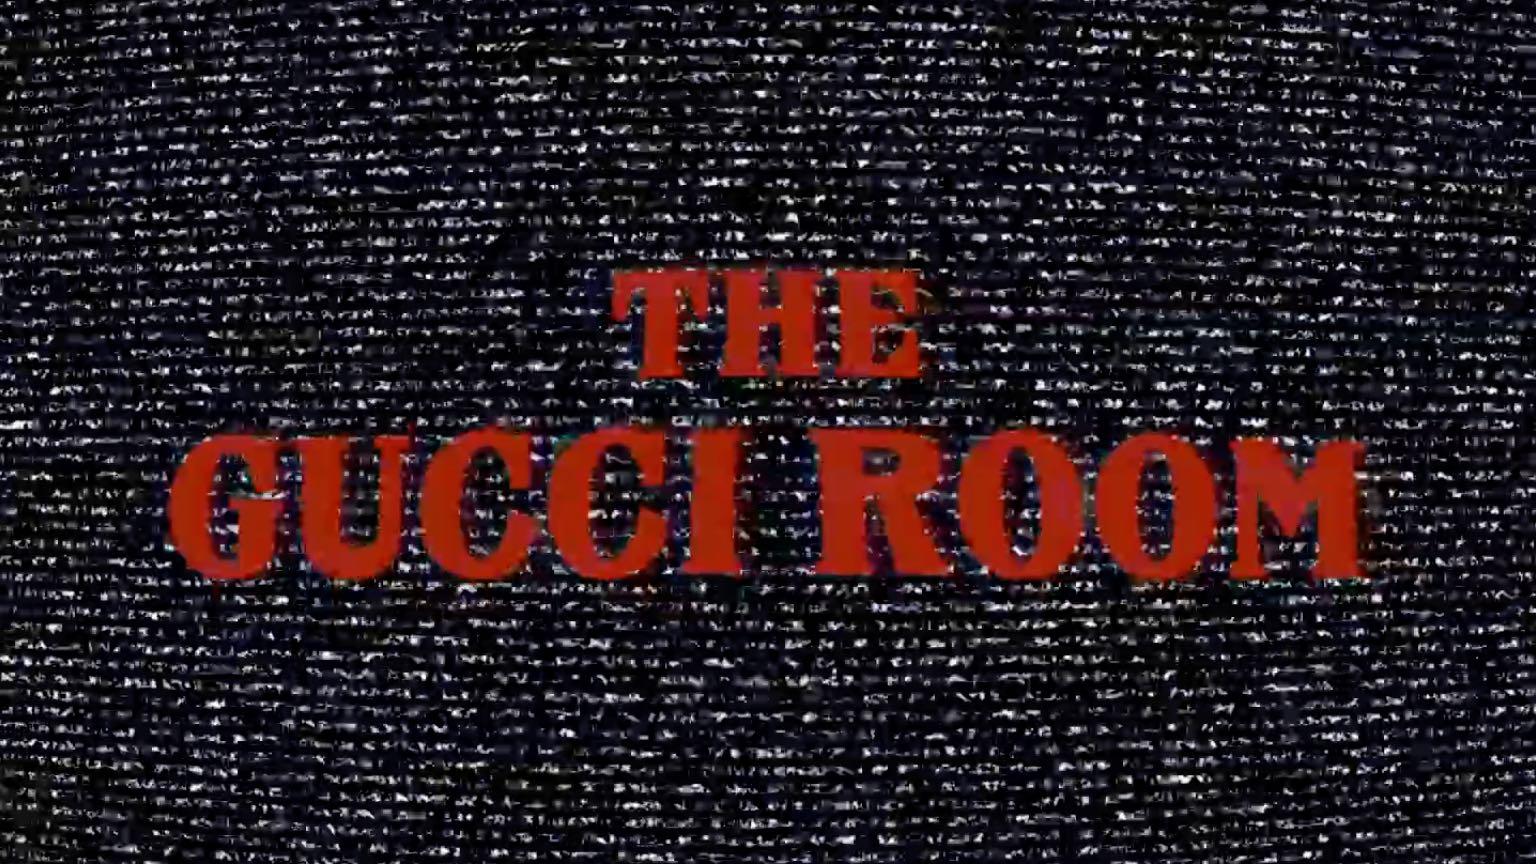 GUCCI x GQ | THE GUCCI ROOM TEASER